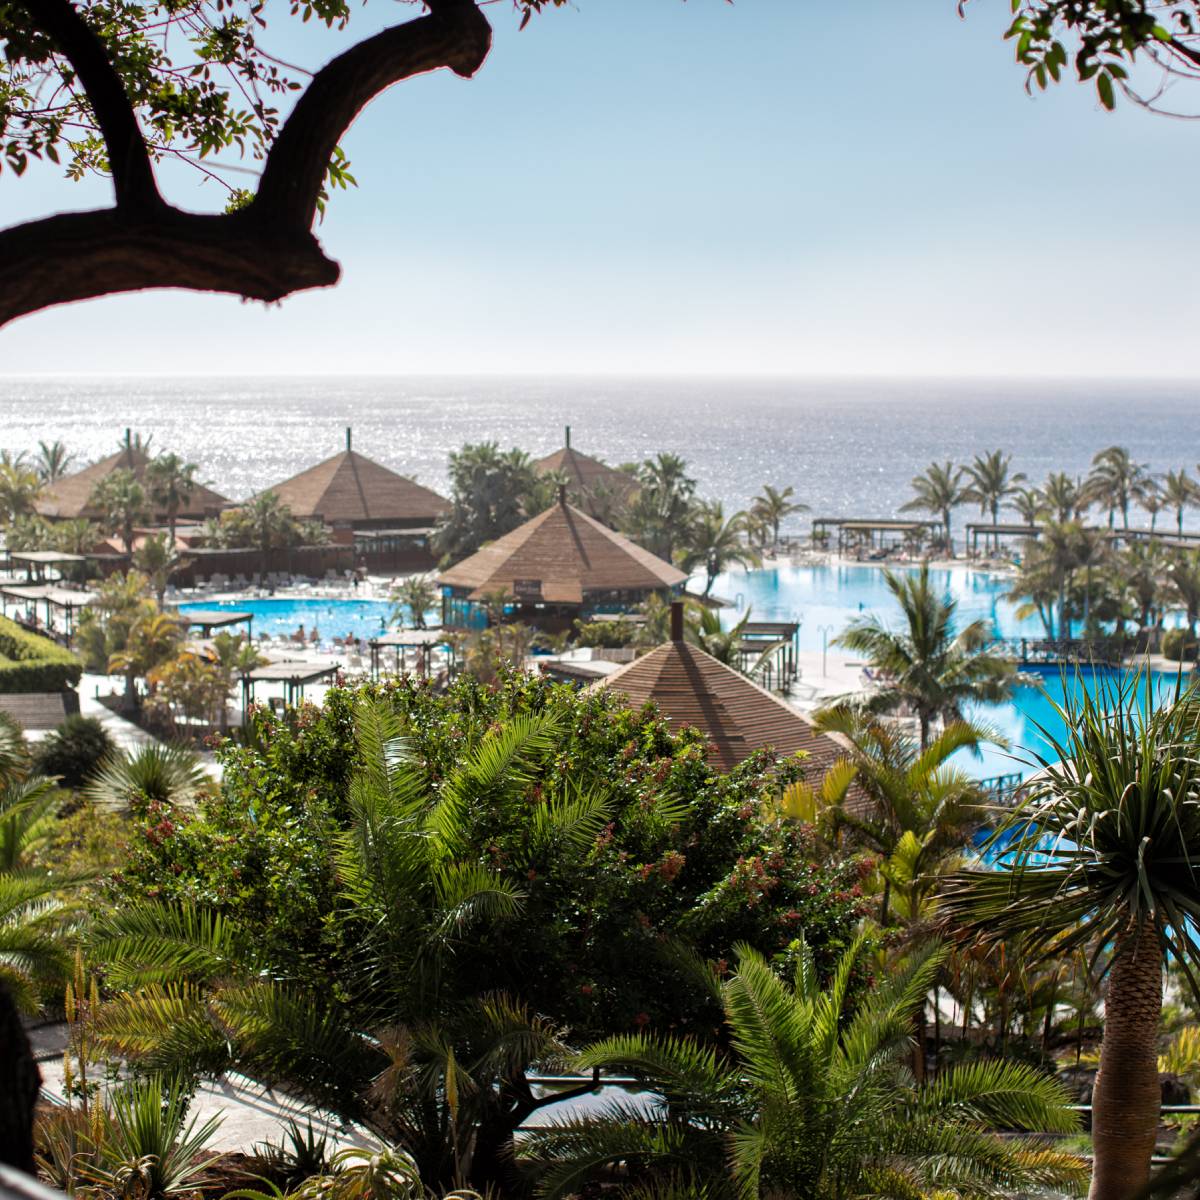 Hotel La Palma & Teneguía Princess, palm trees and pool